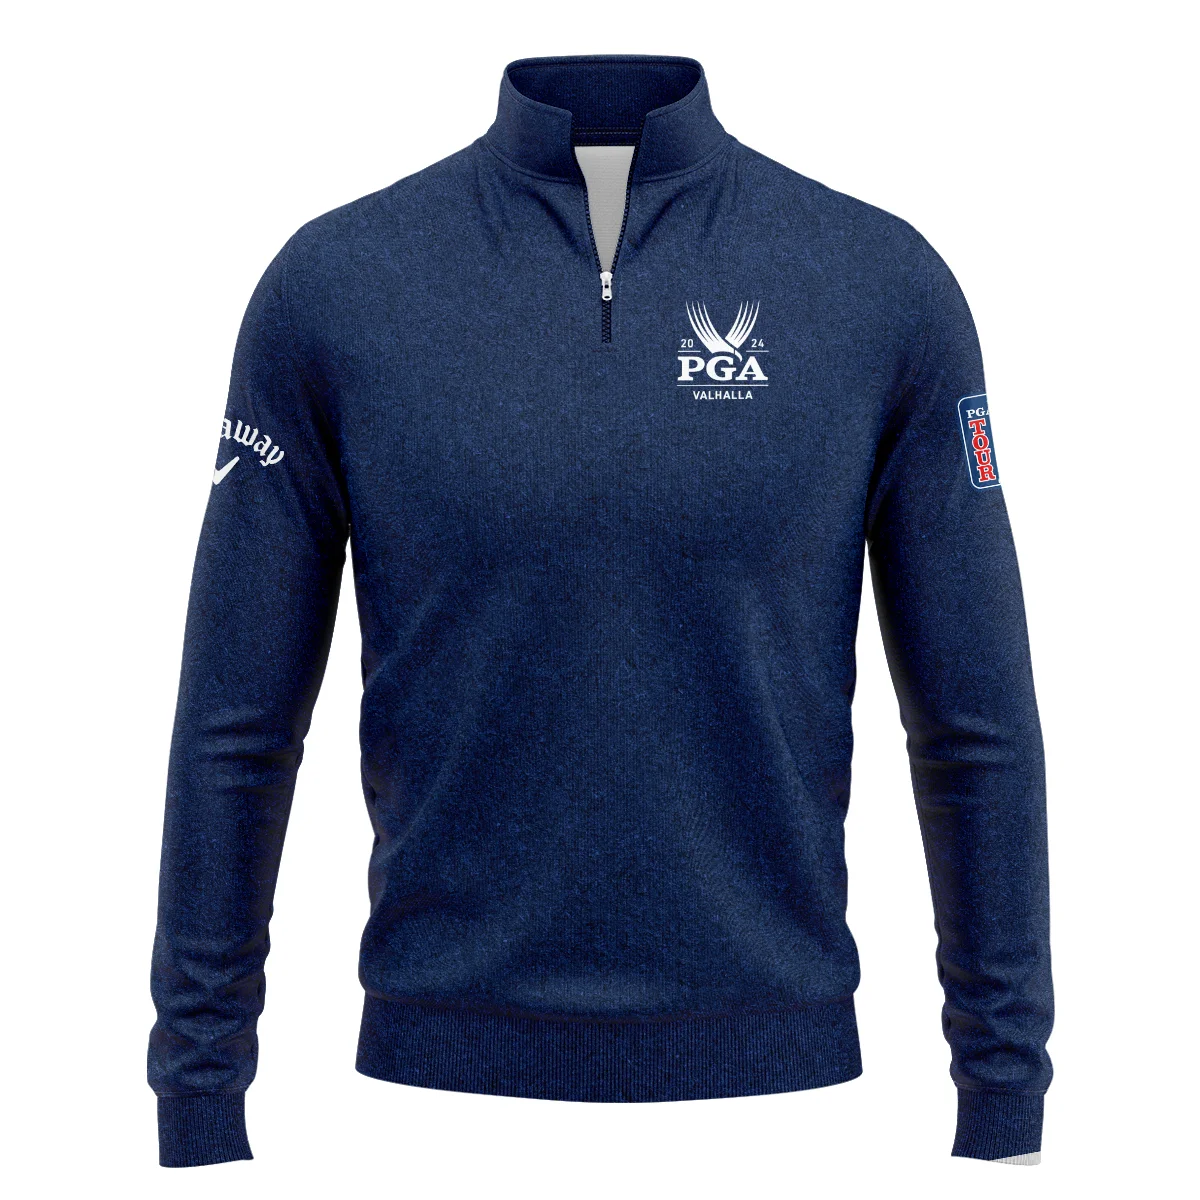 Special Version 2024 PGA Championship Valhalla Callaway Long Polo Shirt Blue Paperboard Texture Long Polo Shirt For Men